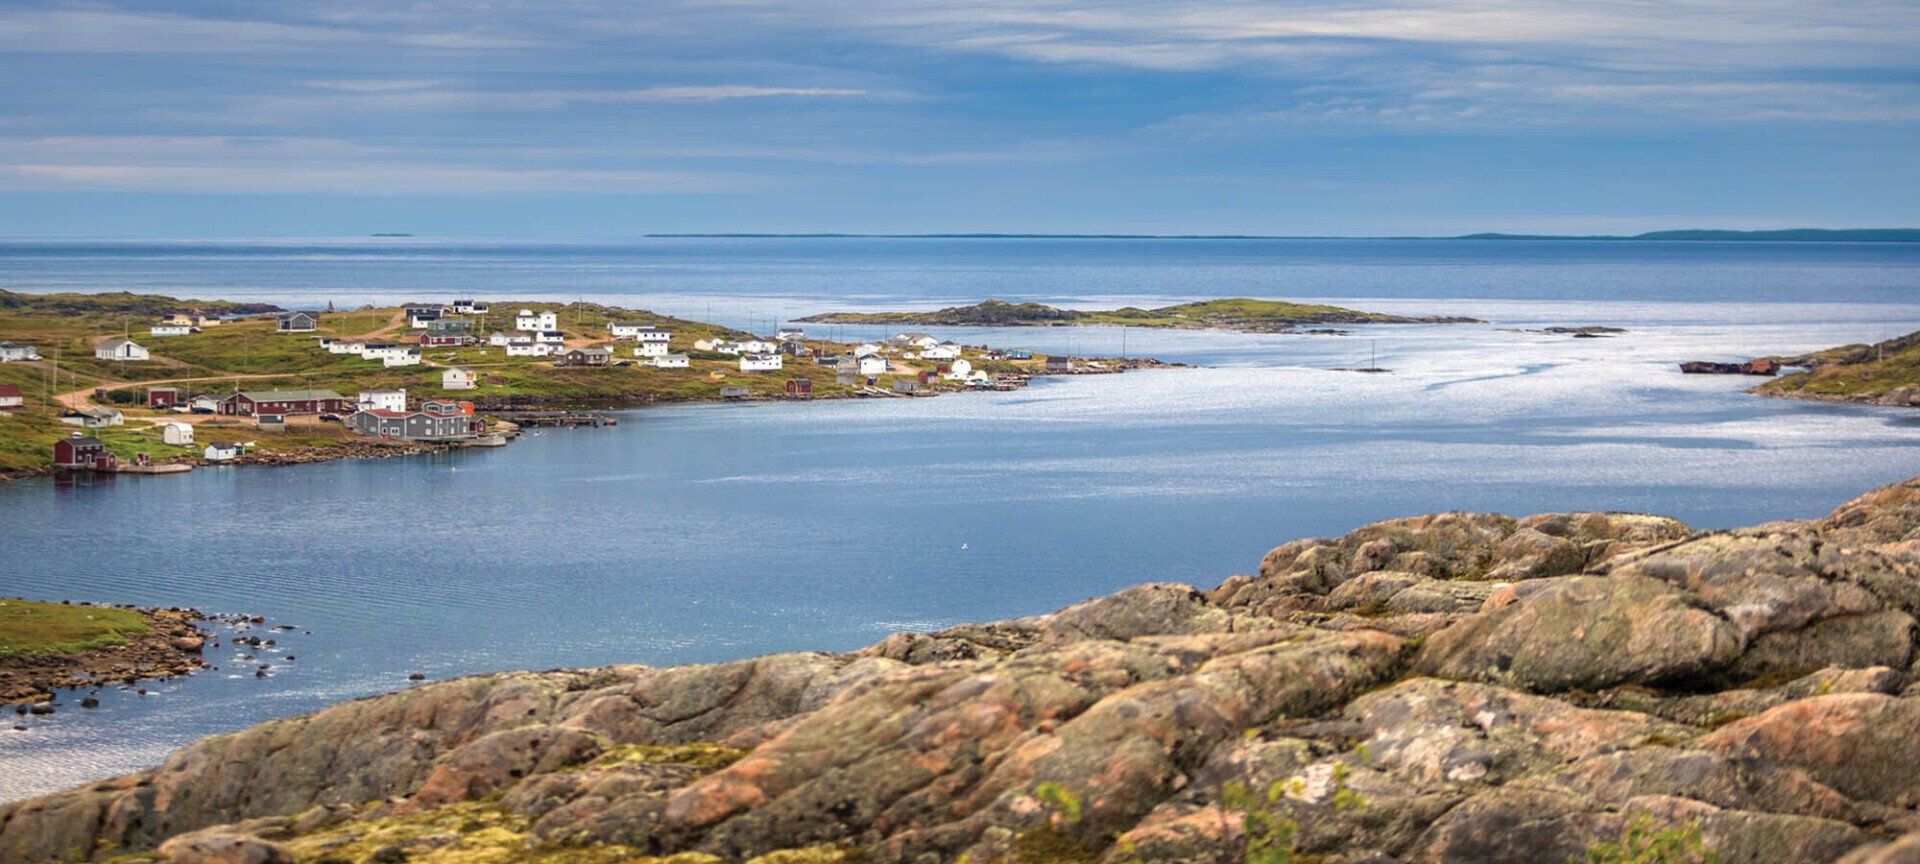 Reb Bay, Labrador